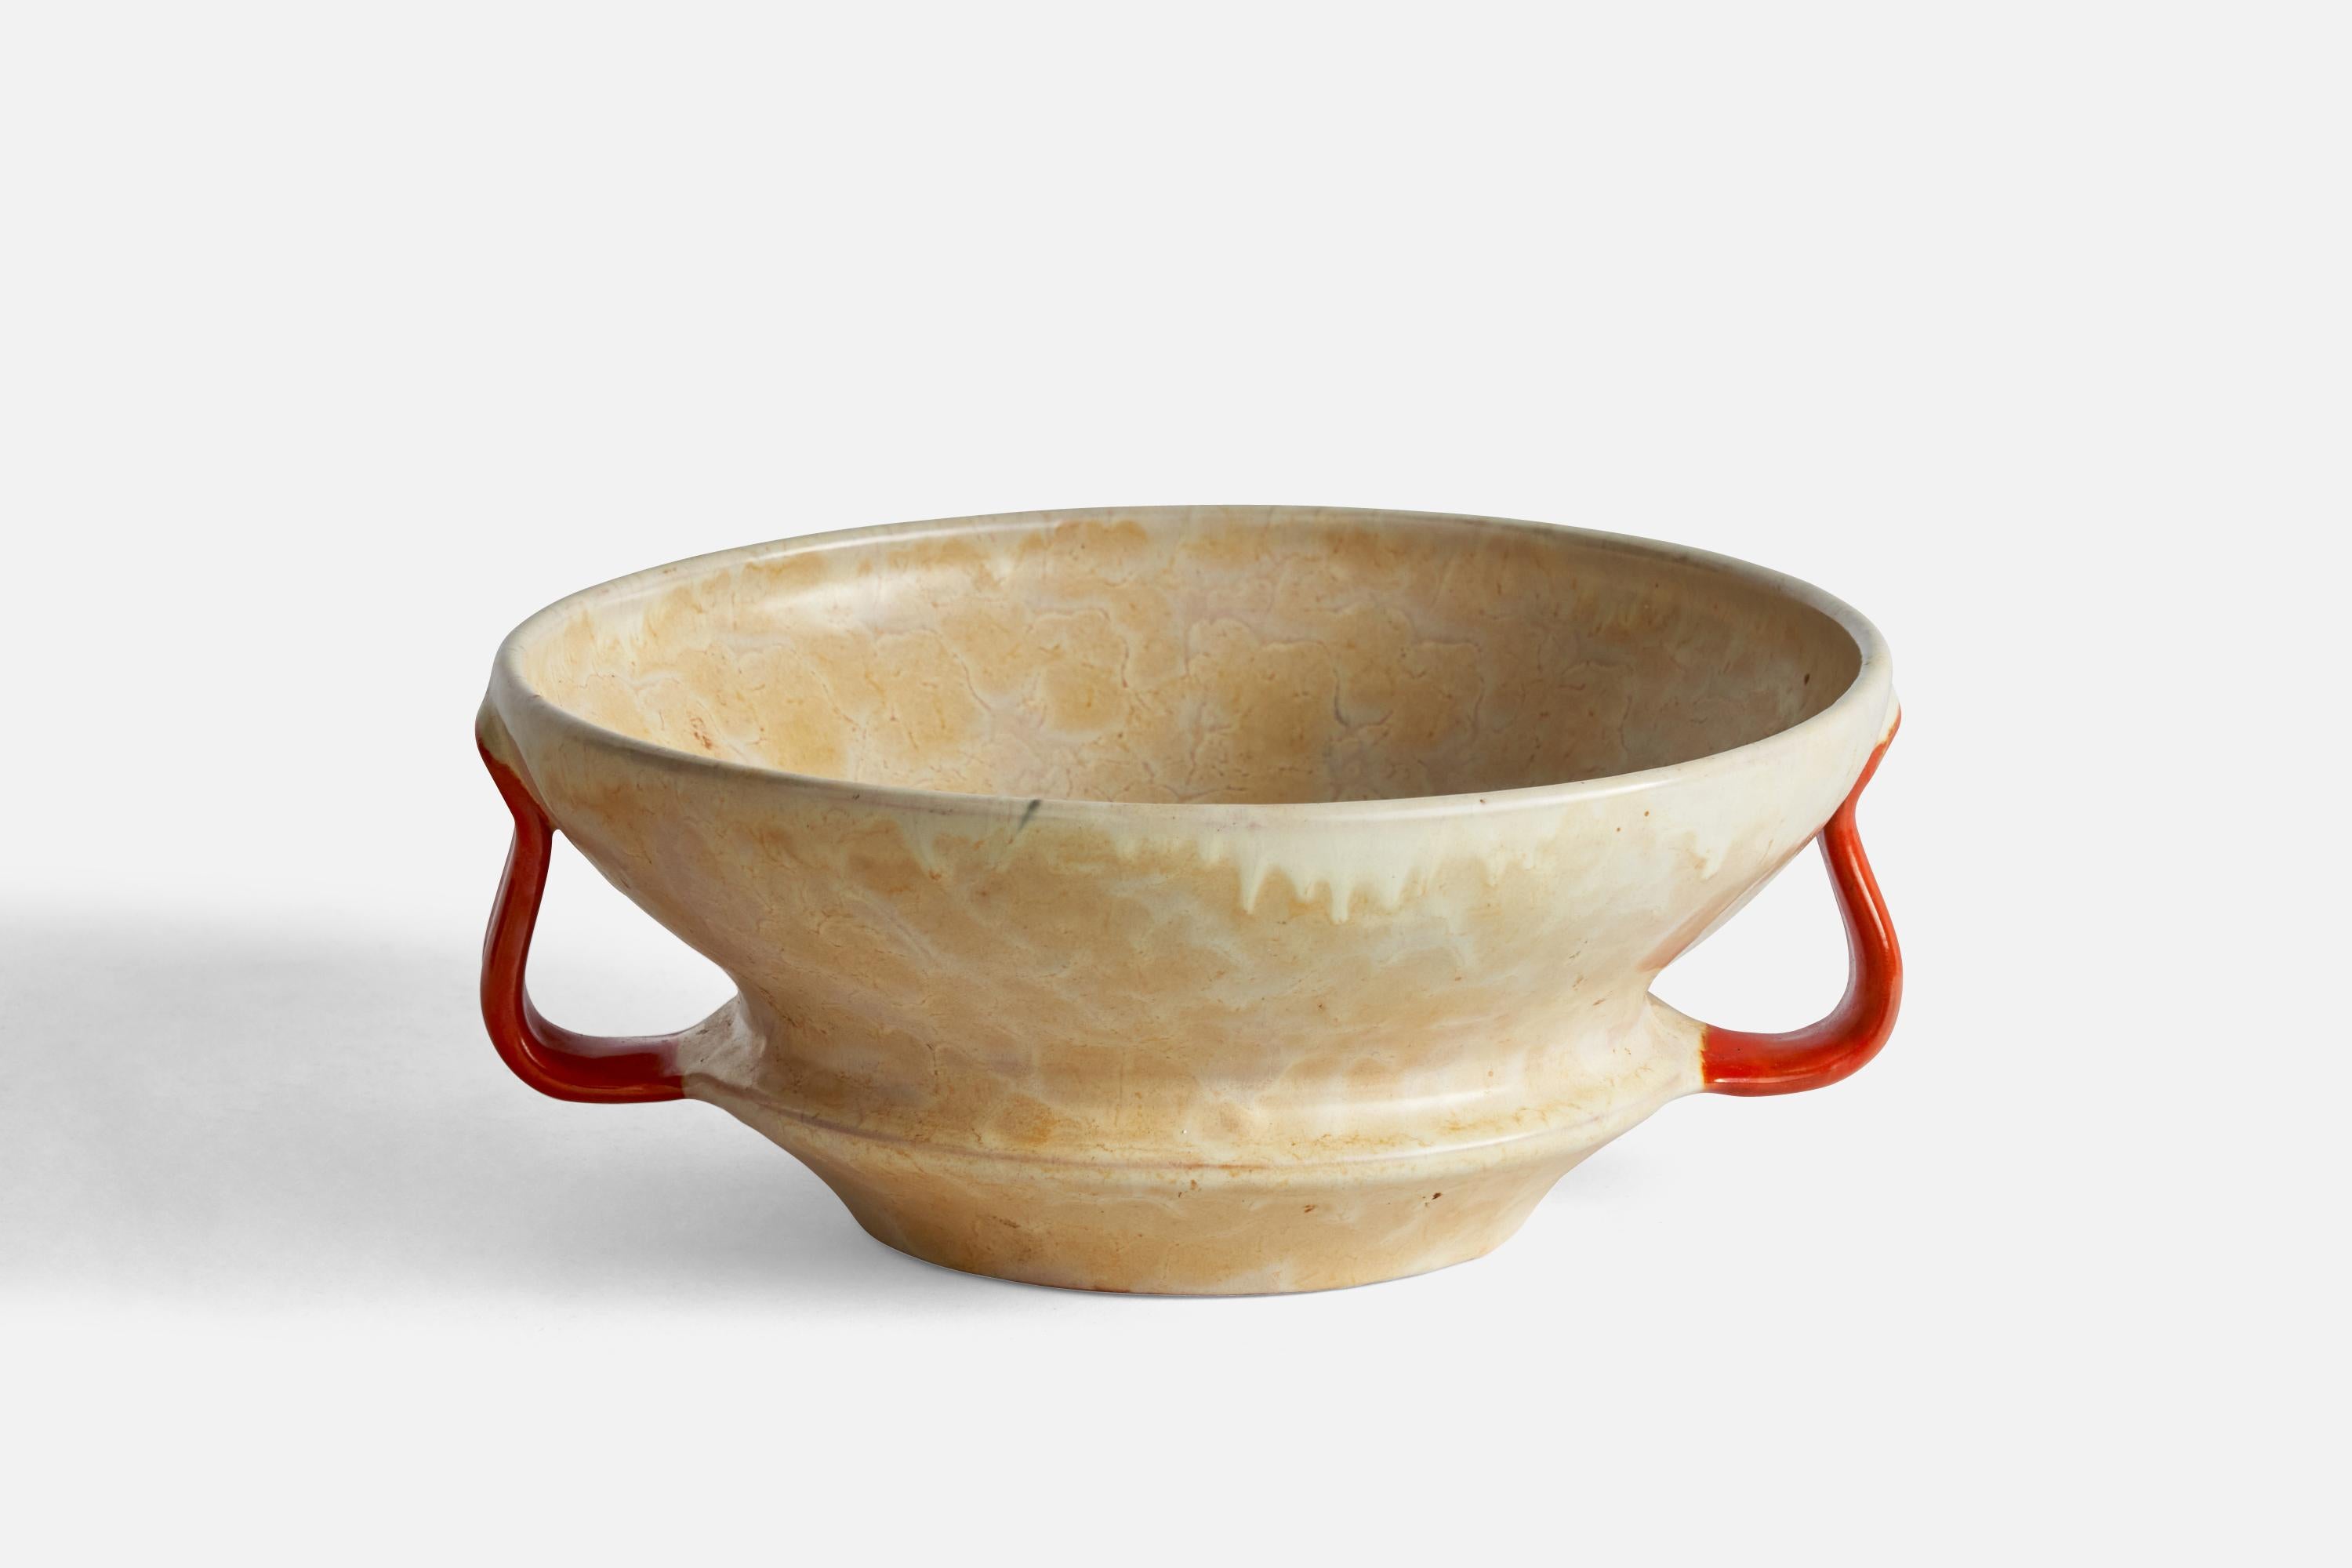 A beige and orange-glazed earthenware bowl designed and produced by Upsala Ekeby, Sweden, 1930s.